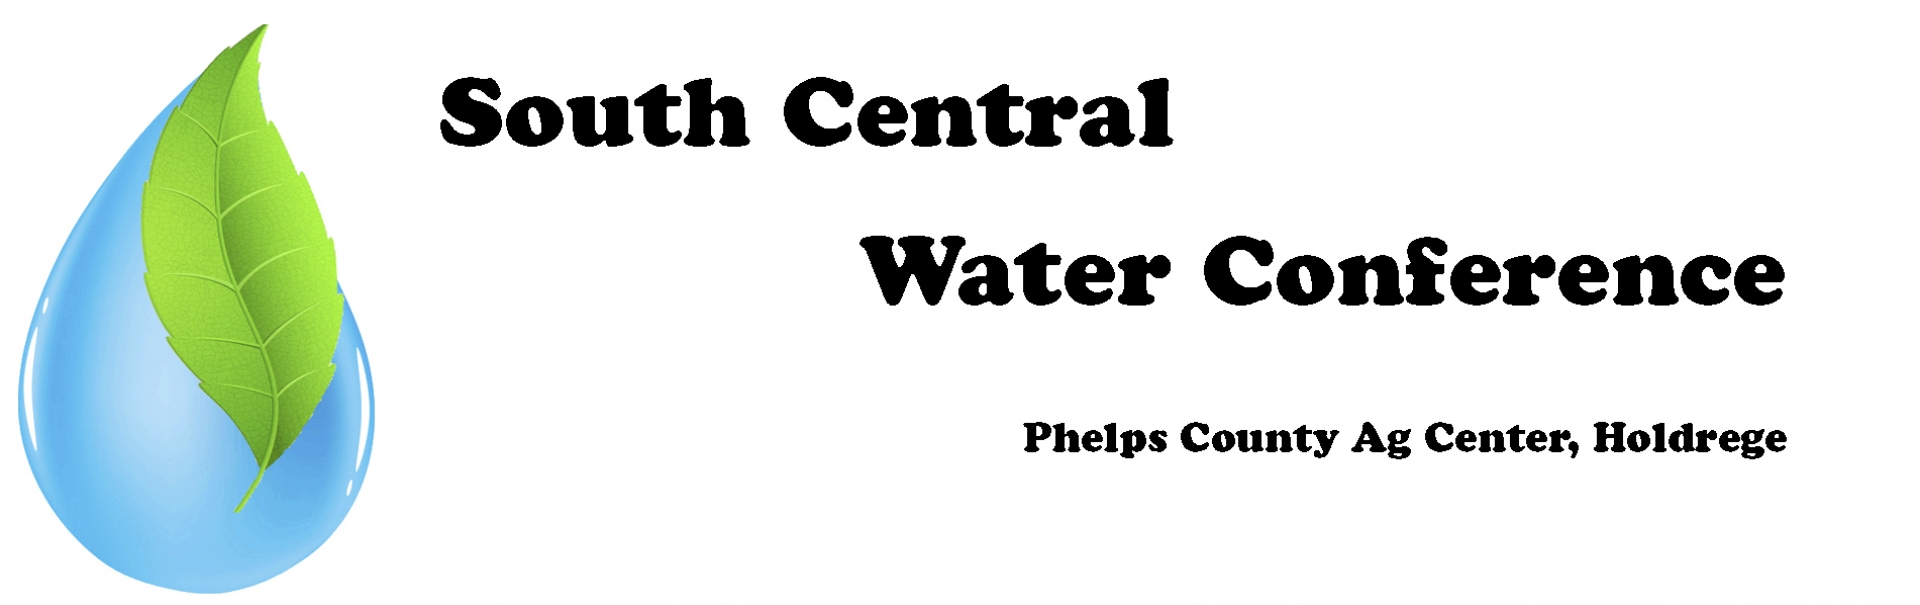 Water Conference Slide